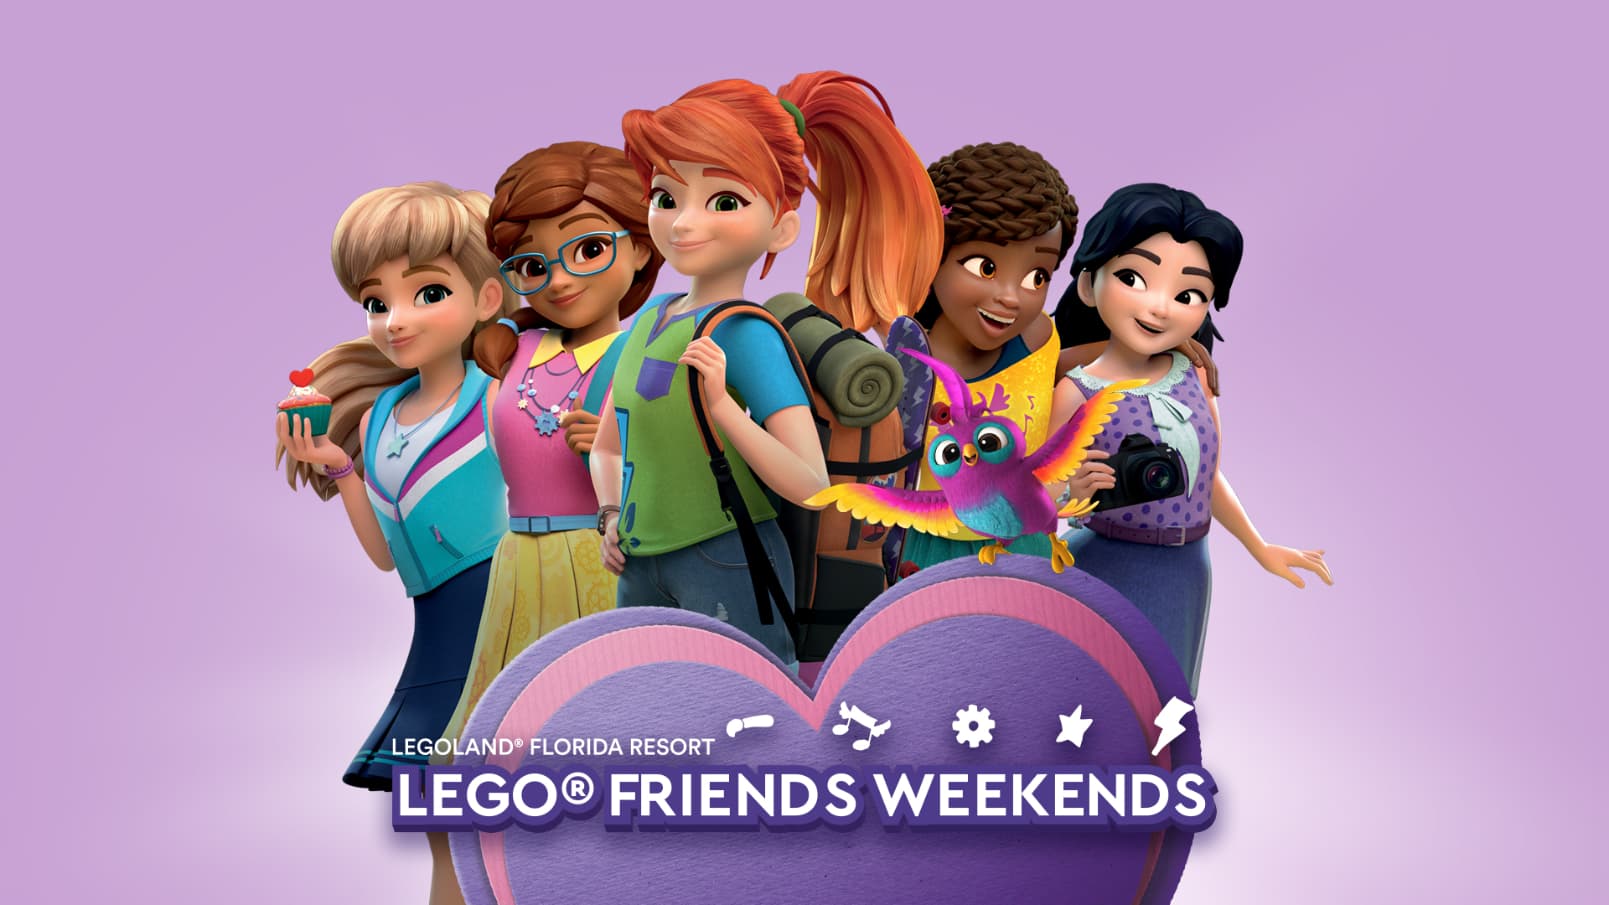 LEGO Friends Weekends at LEGOLAND Florida